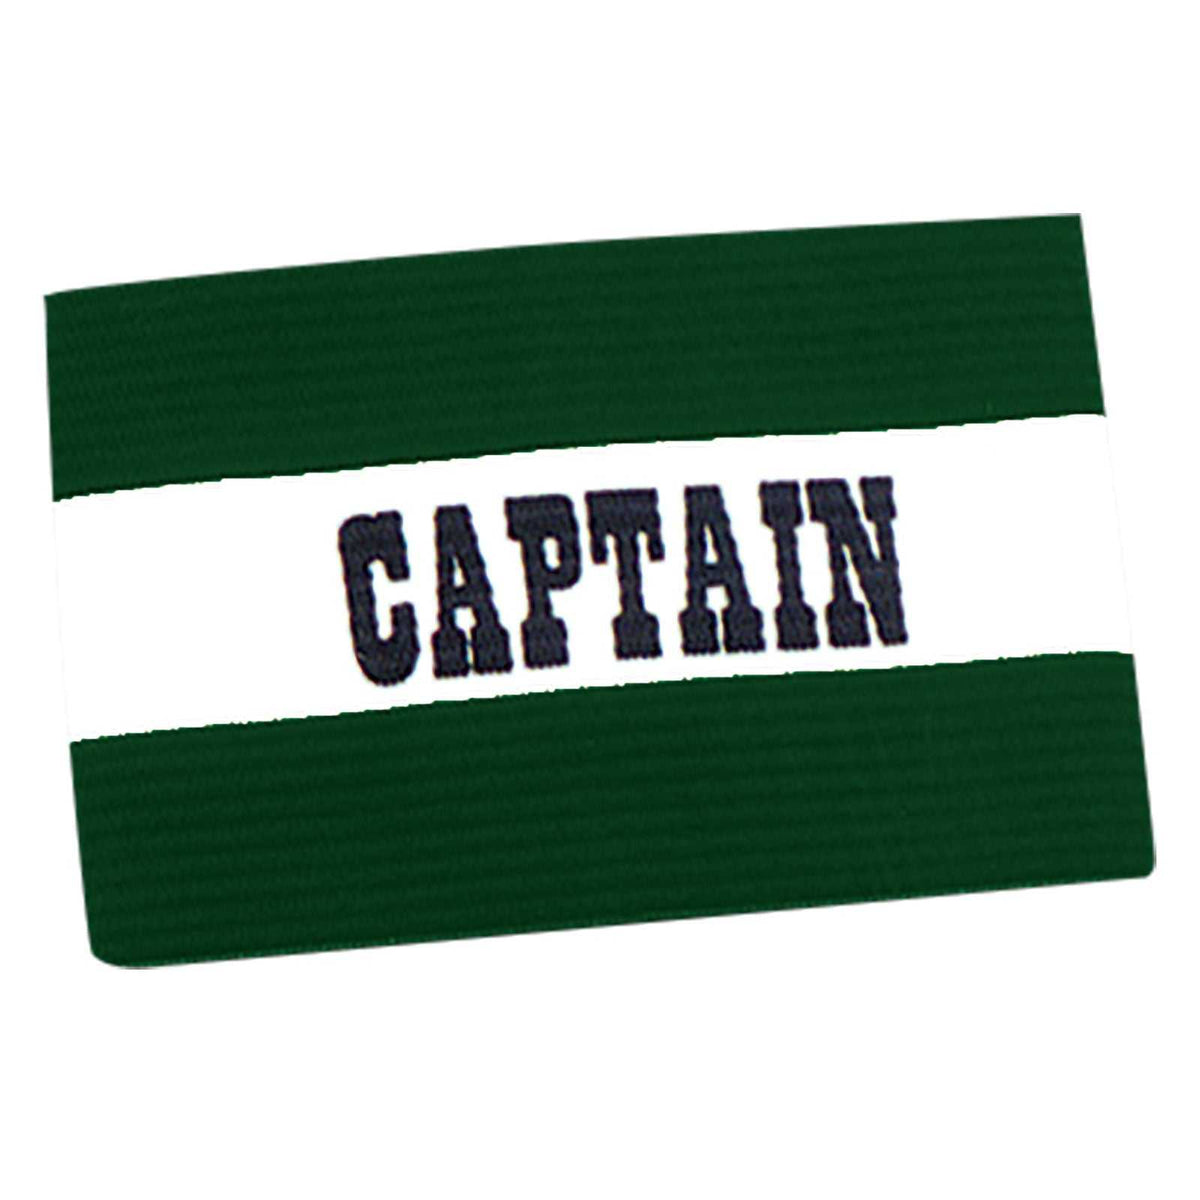 Champro A195 Captain&#39;s Arm Bands - Forest - HIT a Double